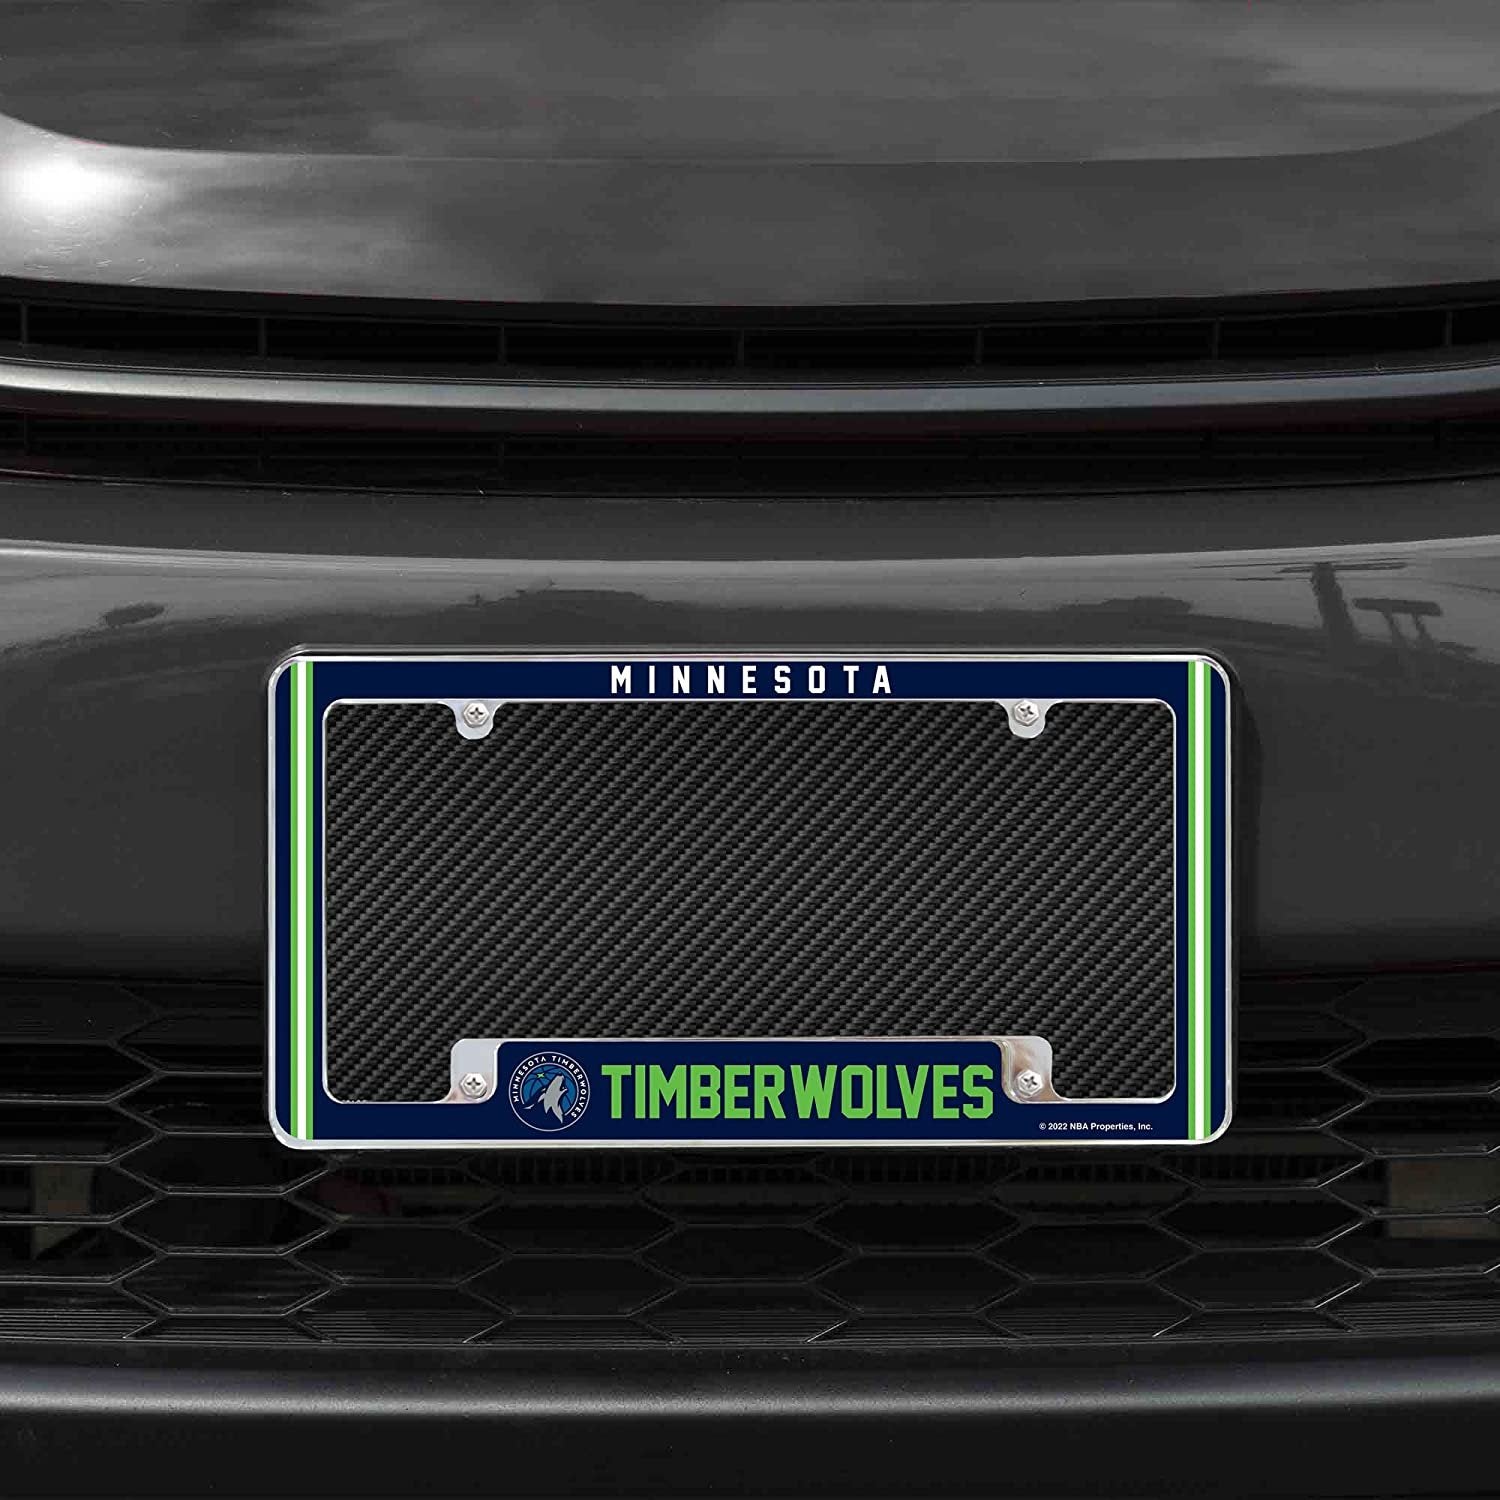 Minnesota Timberwolves Metal License Plate Frame Chrome Tag Cover Alternate Design 6x12 Inch